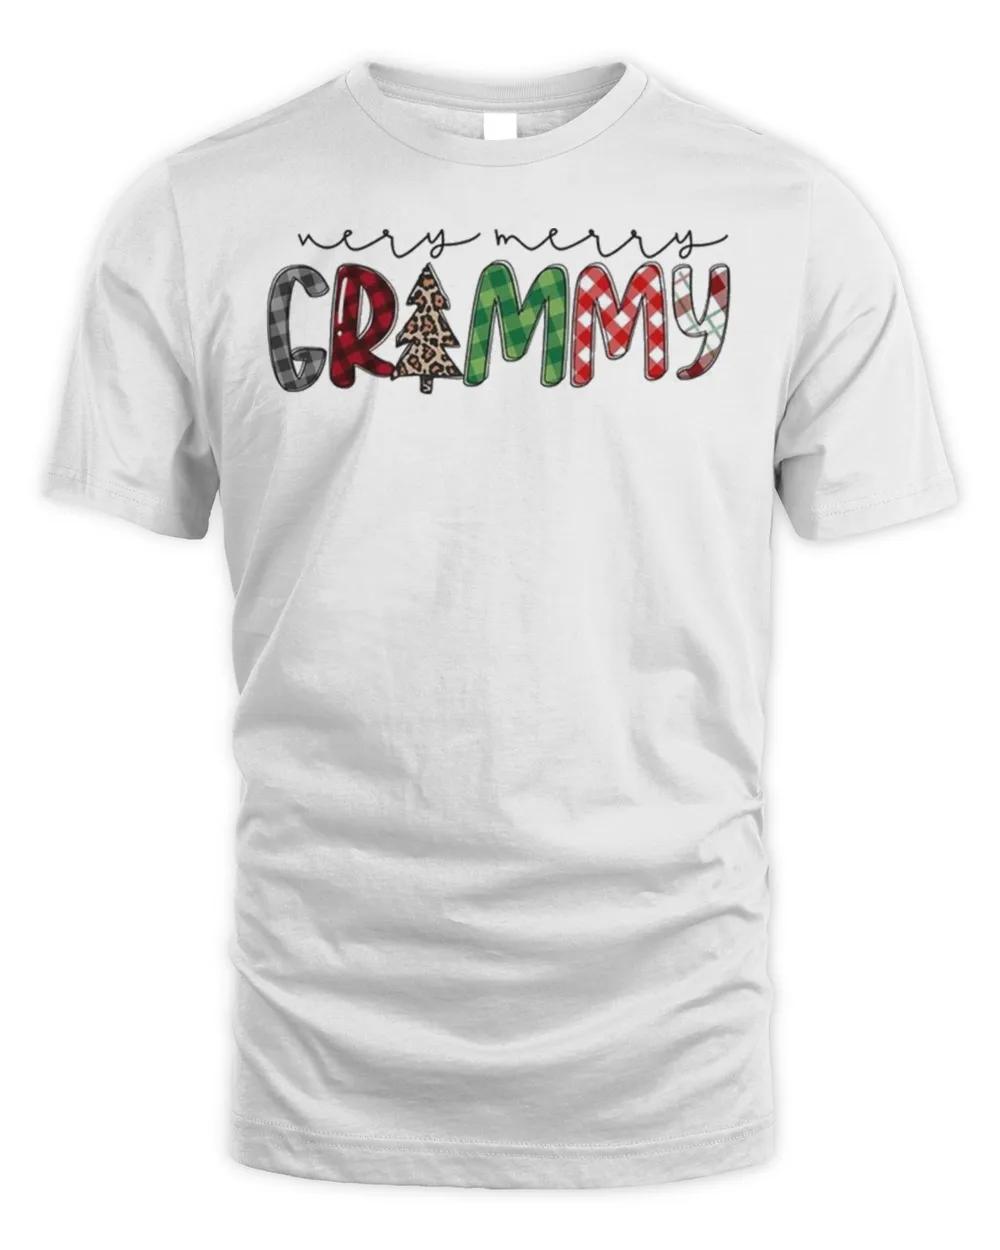 Very Merry Grammy Christmas Tee Shirt